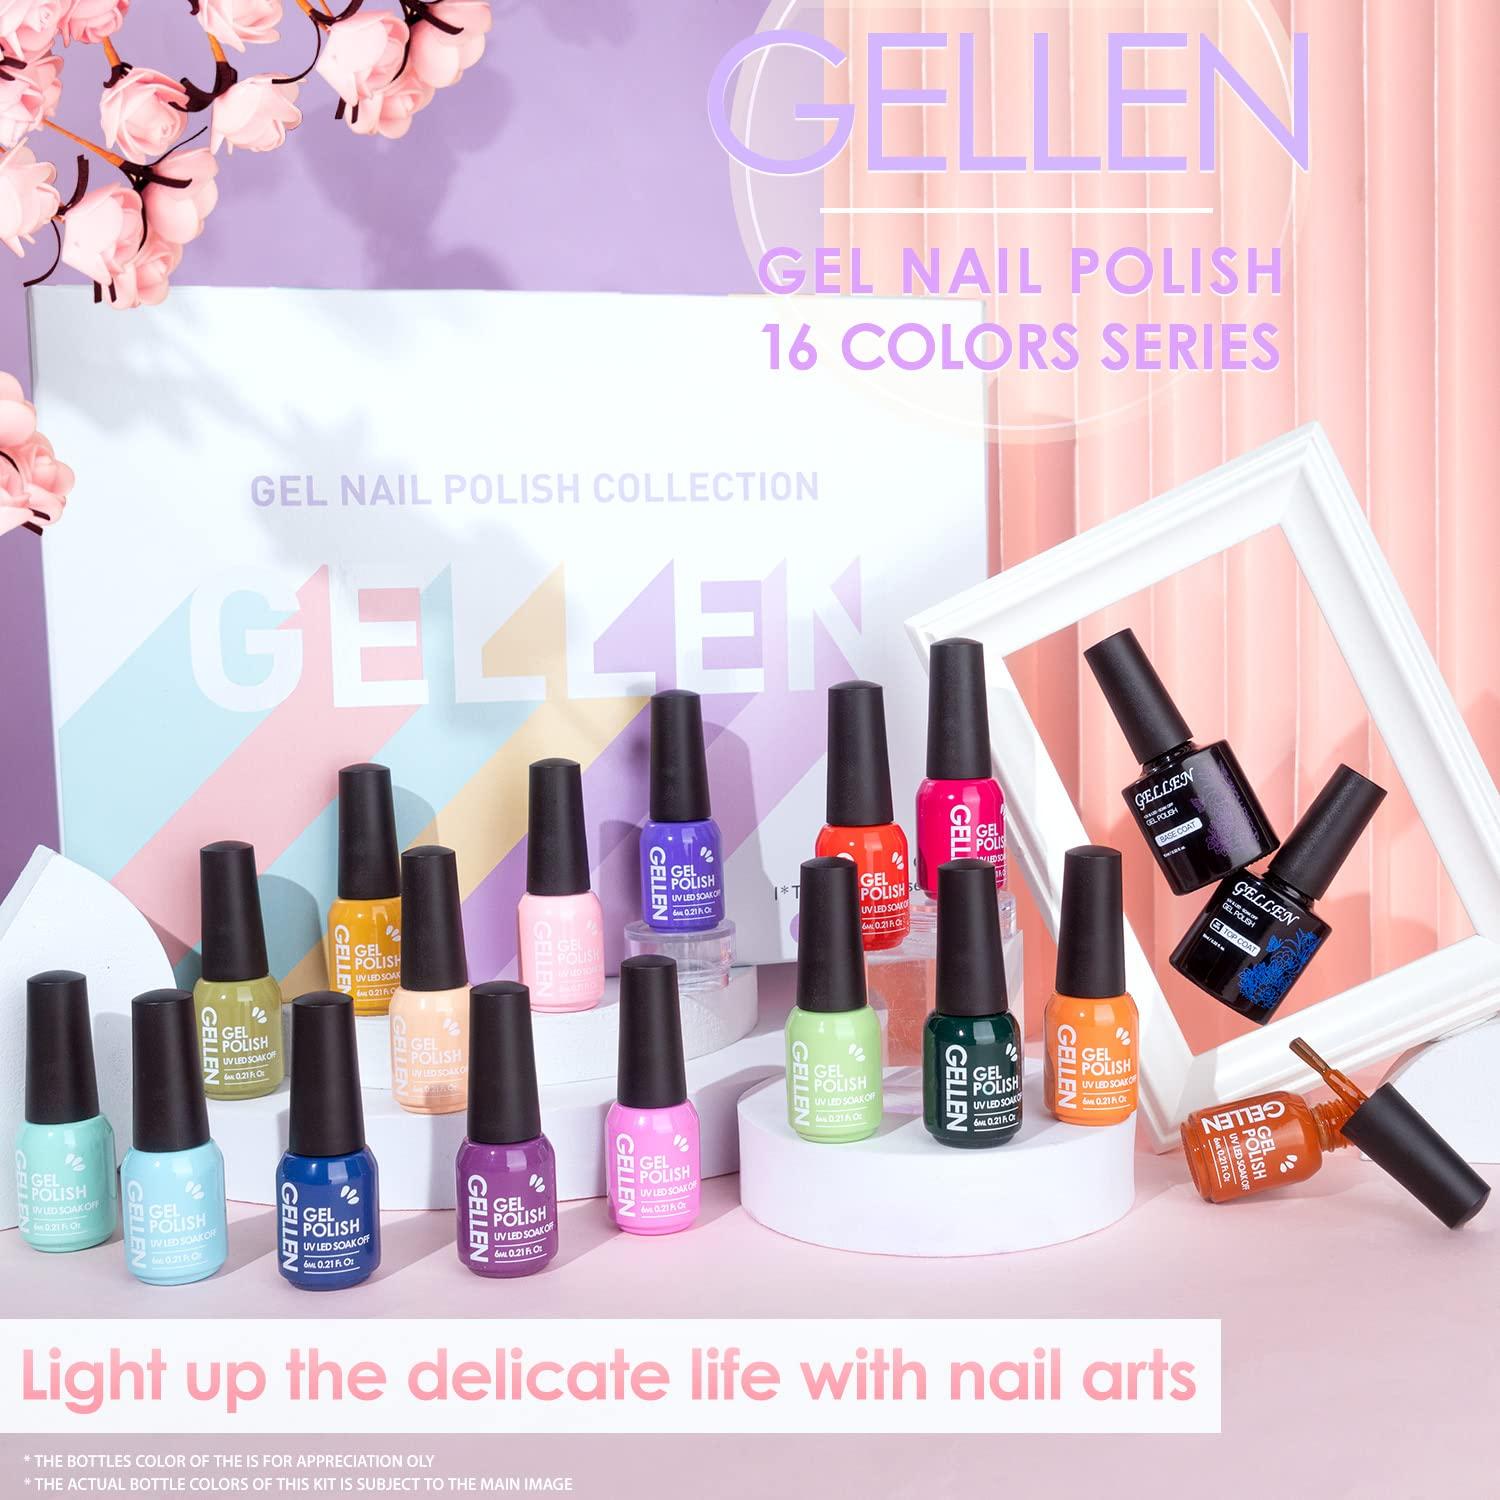 Gellen Gel Nail Polish Kit Review | Breanna McDaniel - YouTube